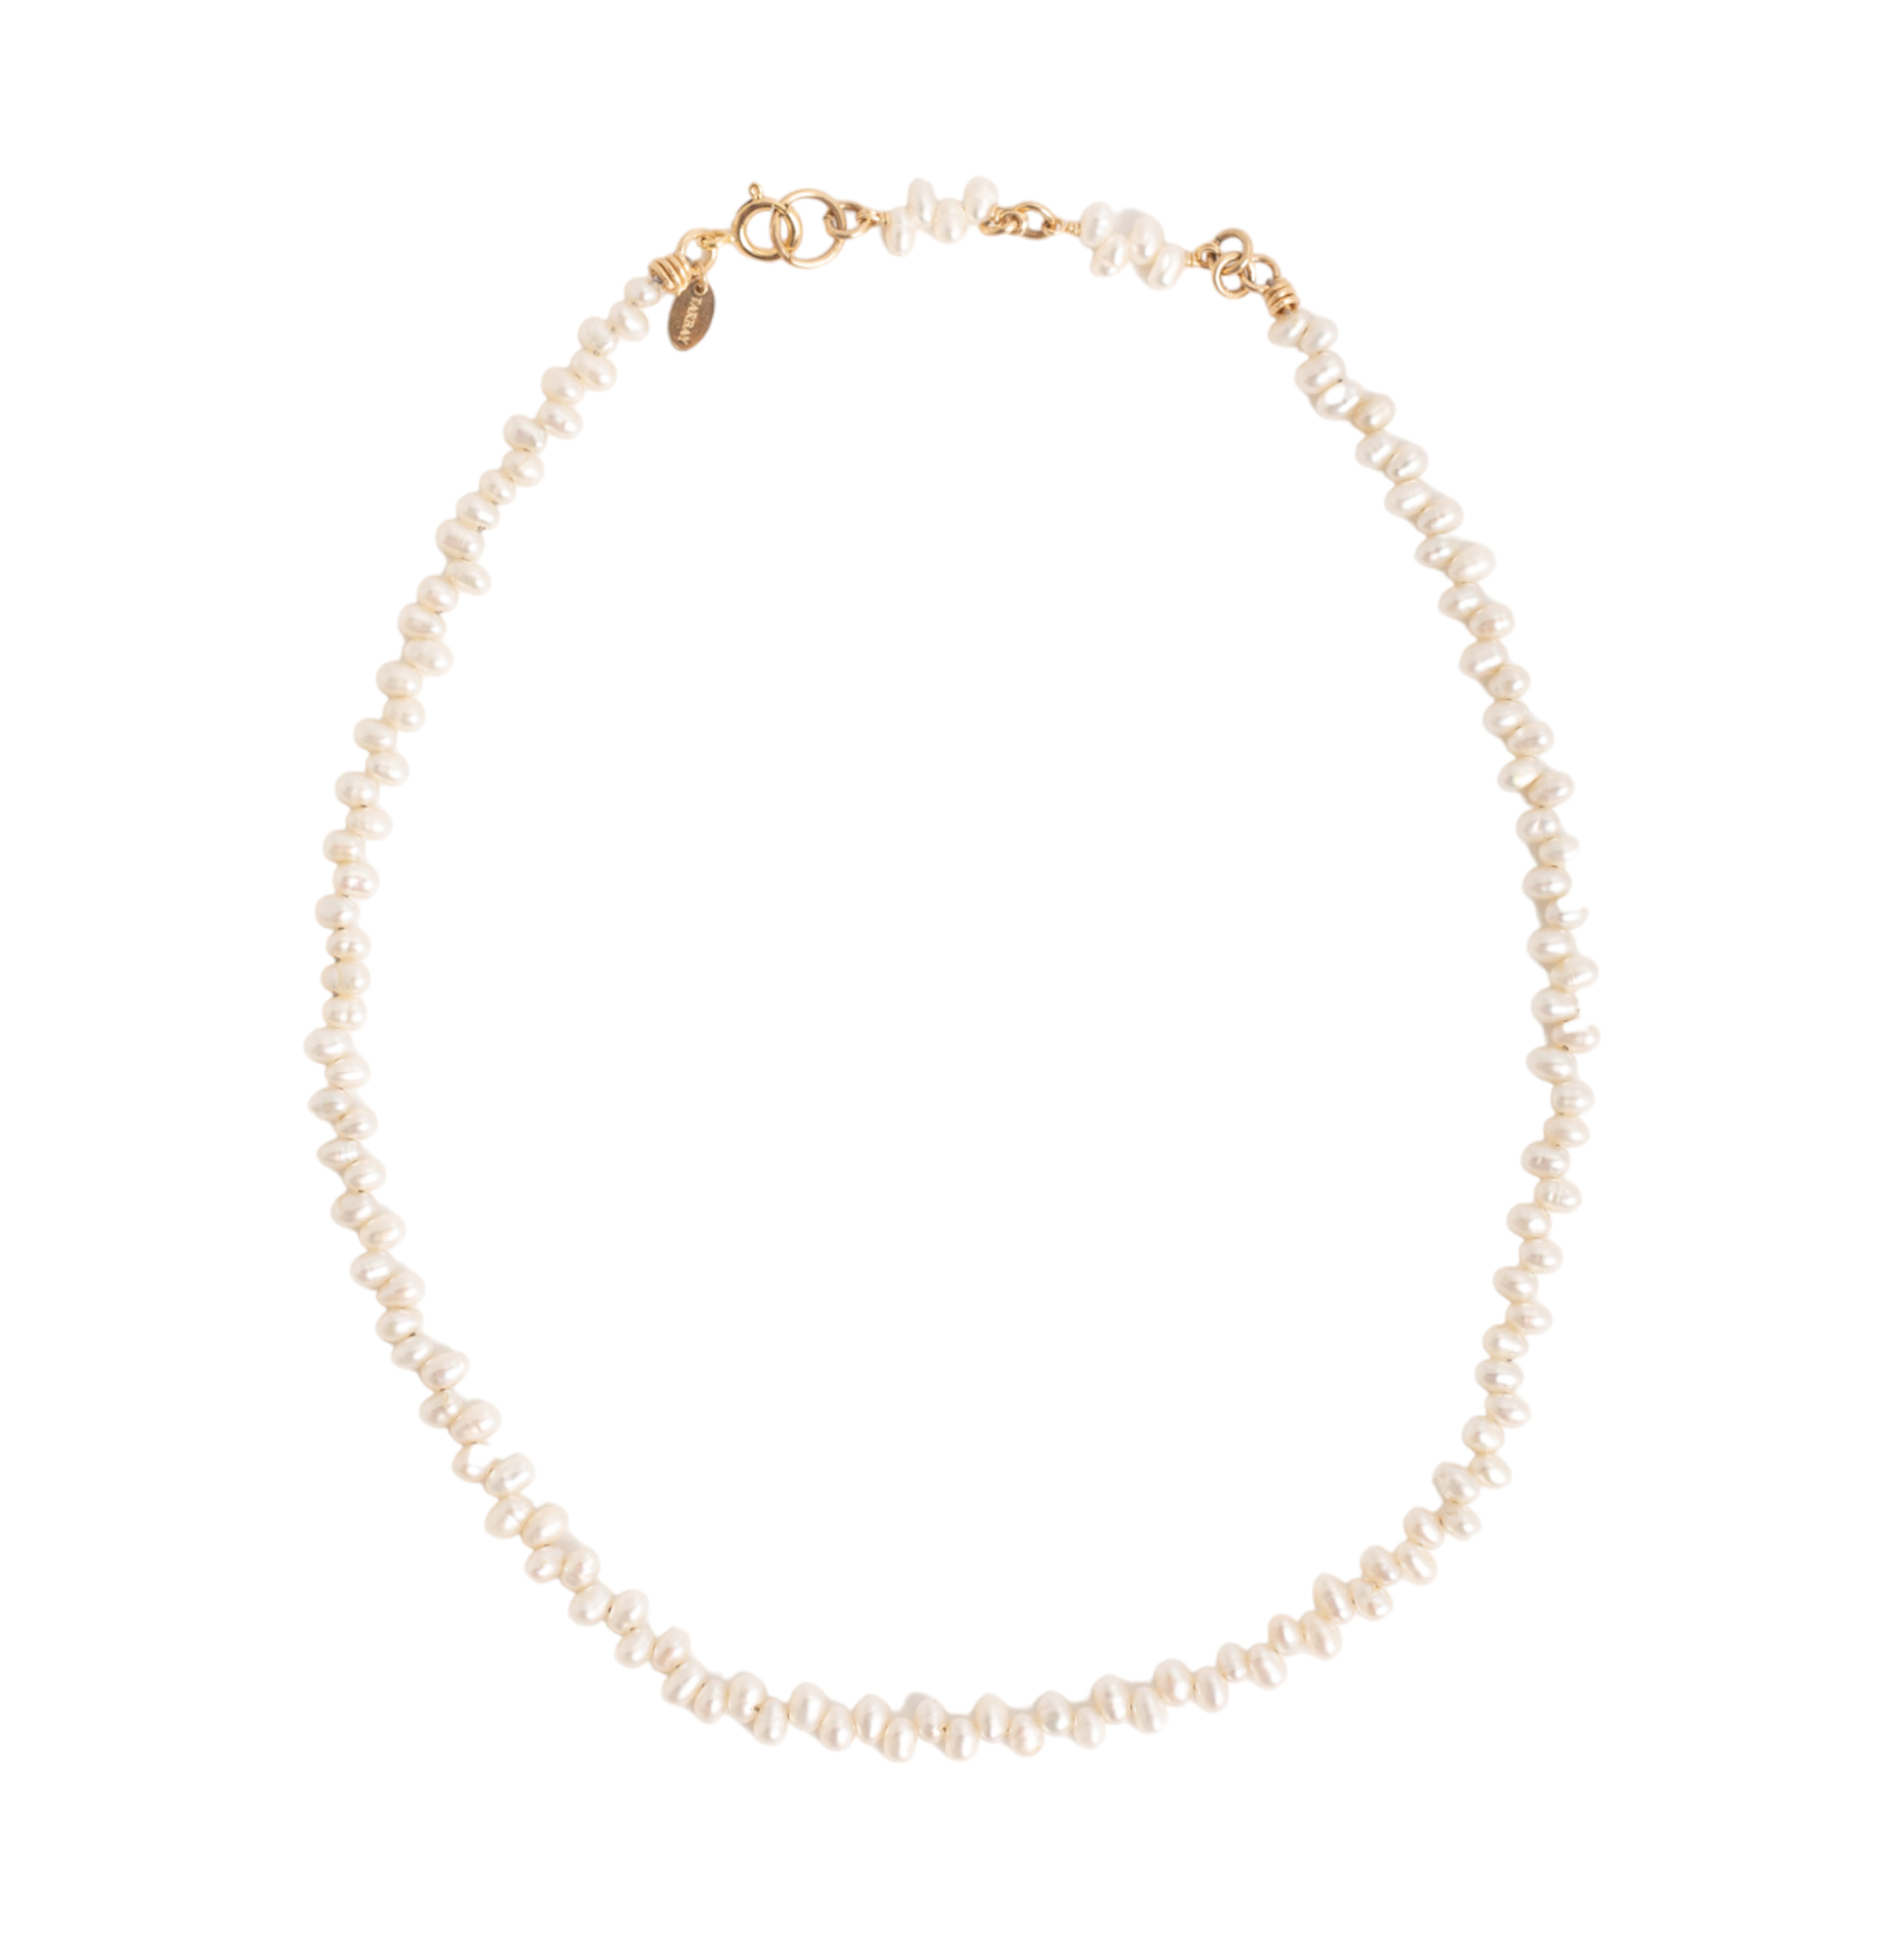 Susan Necklace #4 - Pearl Necklaces TARBAY   